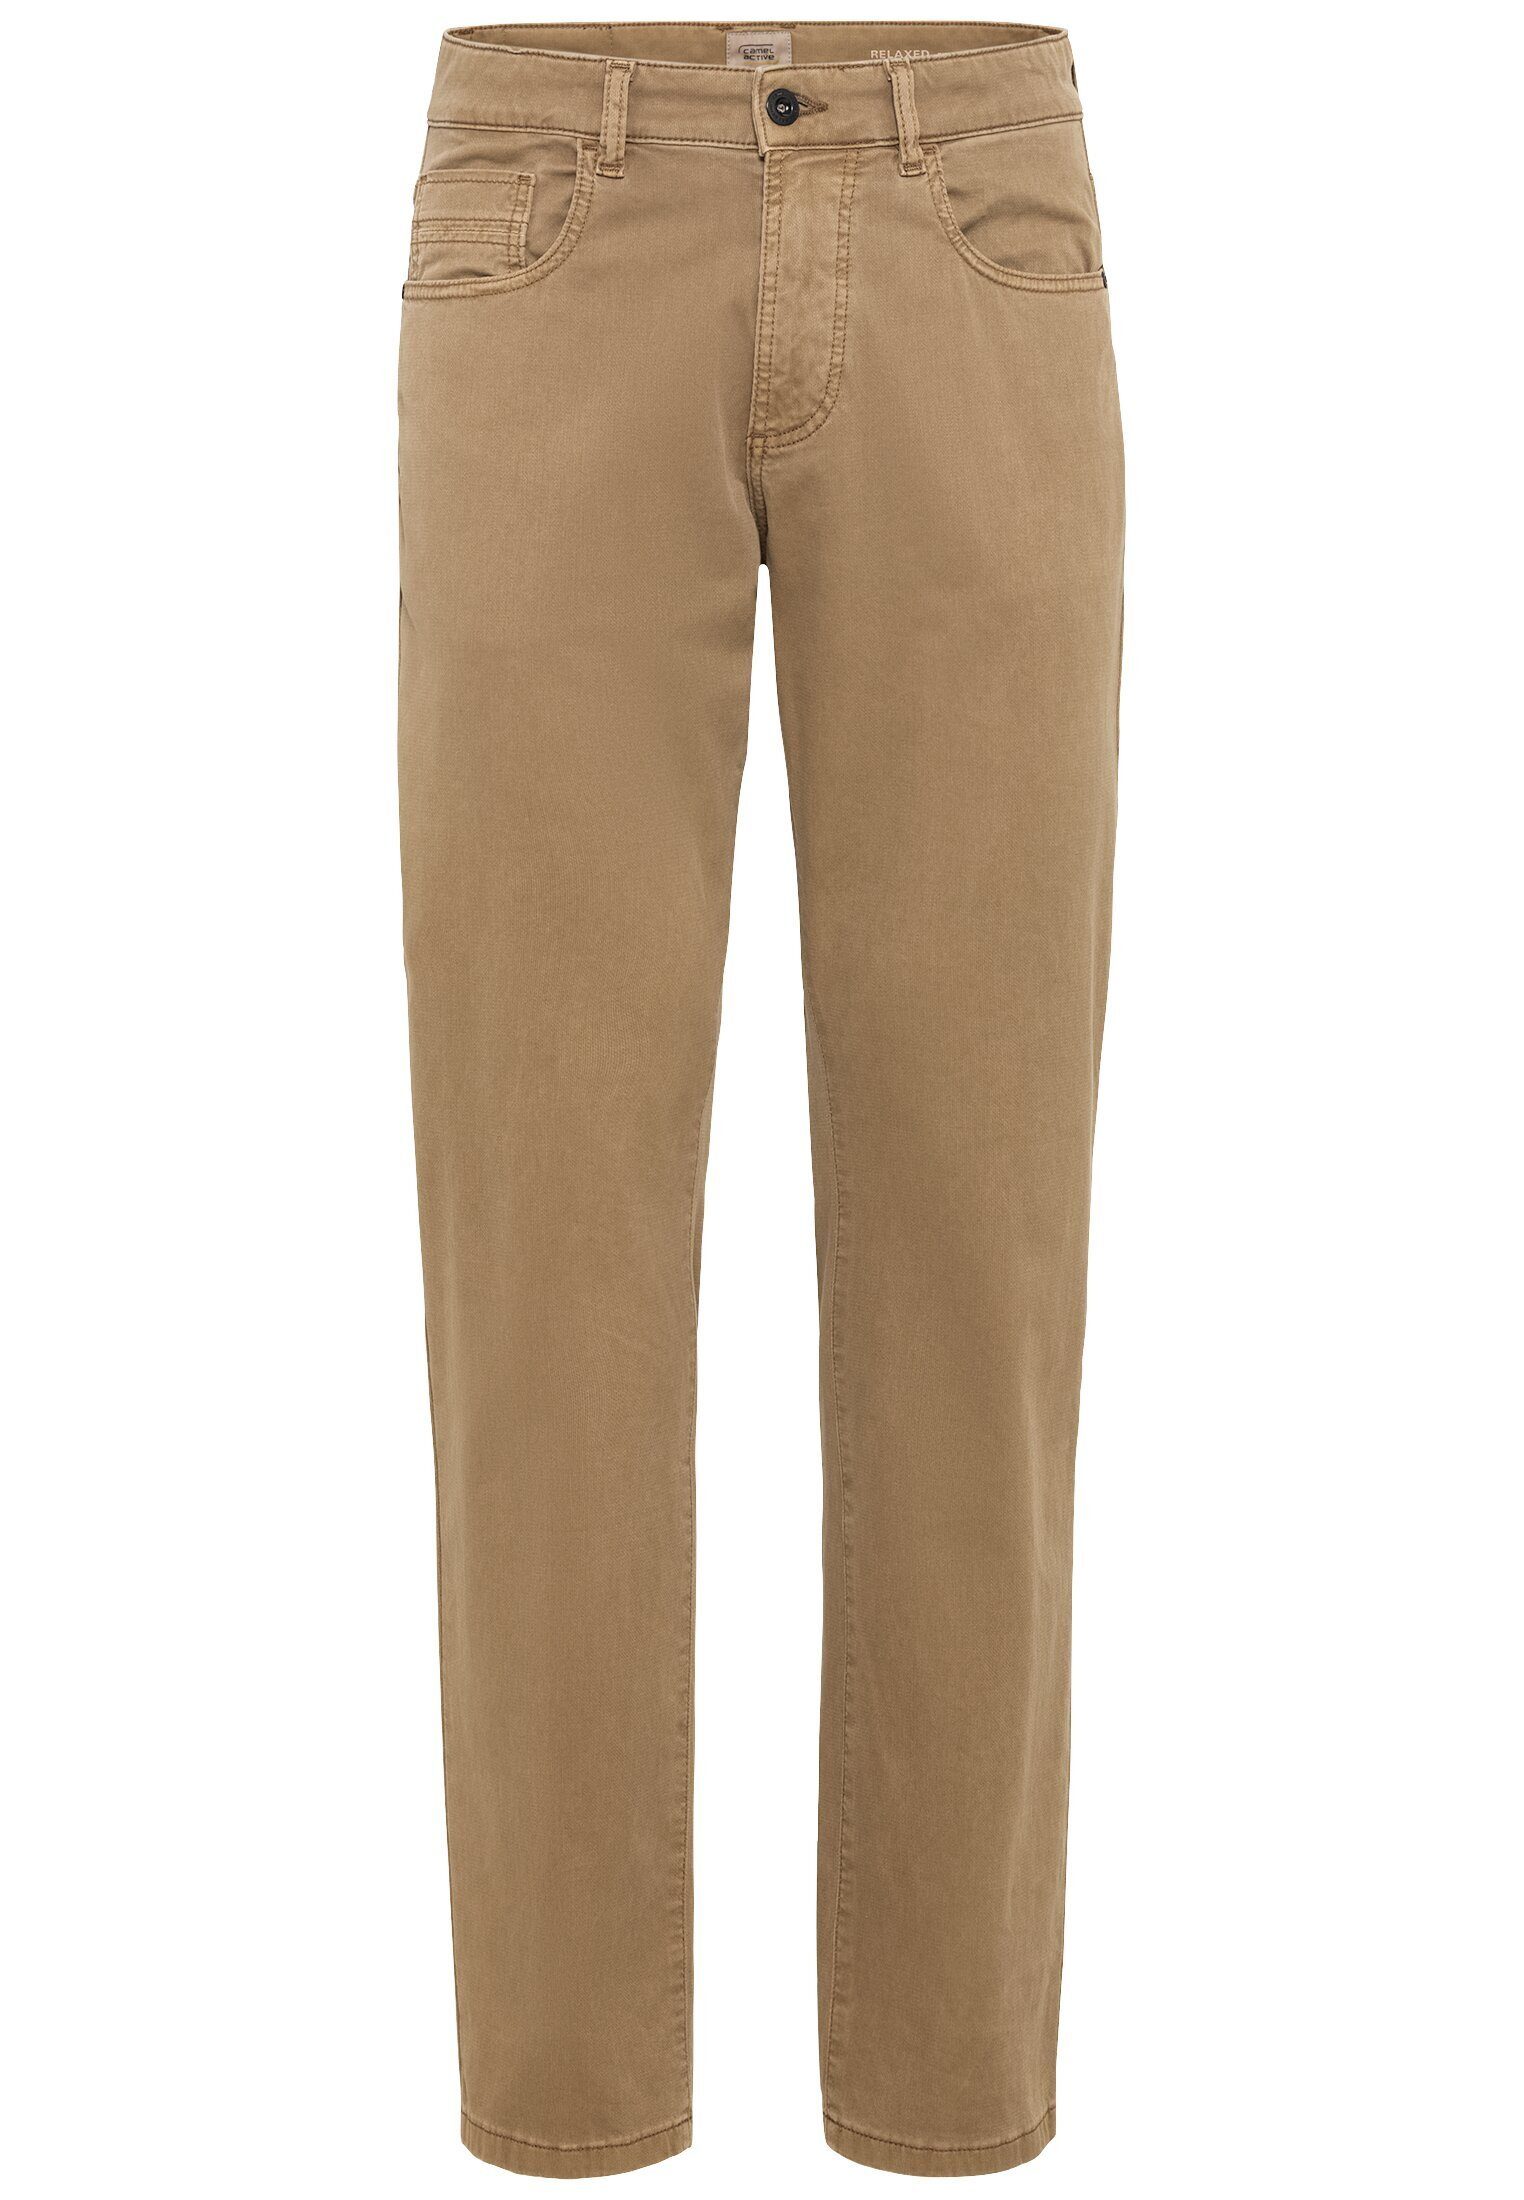 camel active 5-Pocket-Jeans 5-Pocket Hose Braun Relaxed Fit